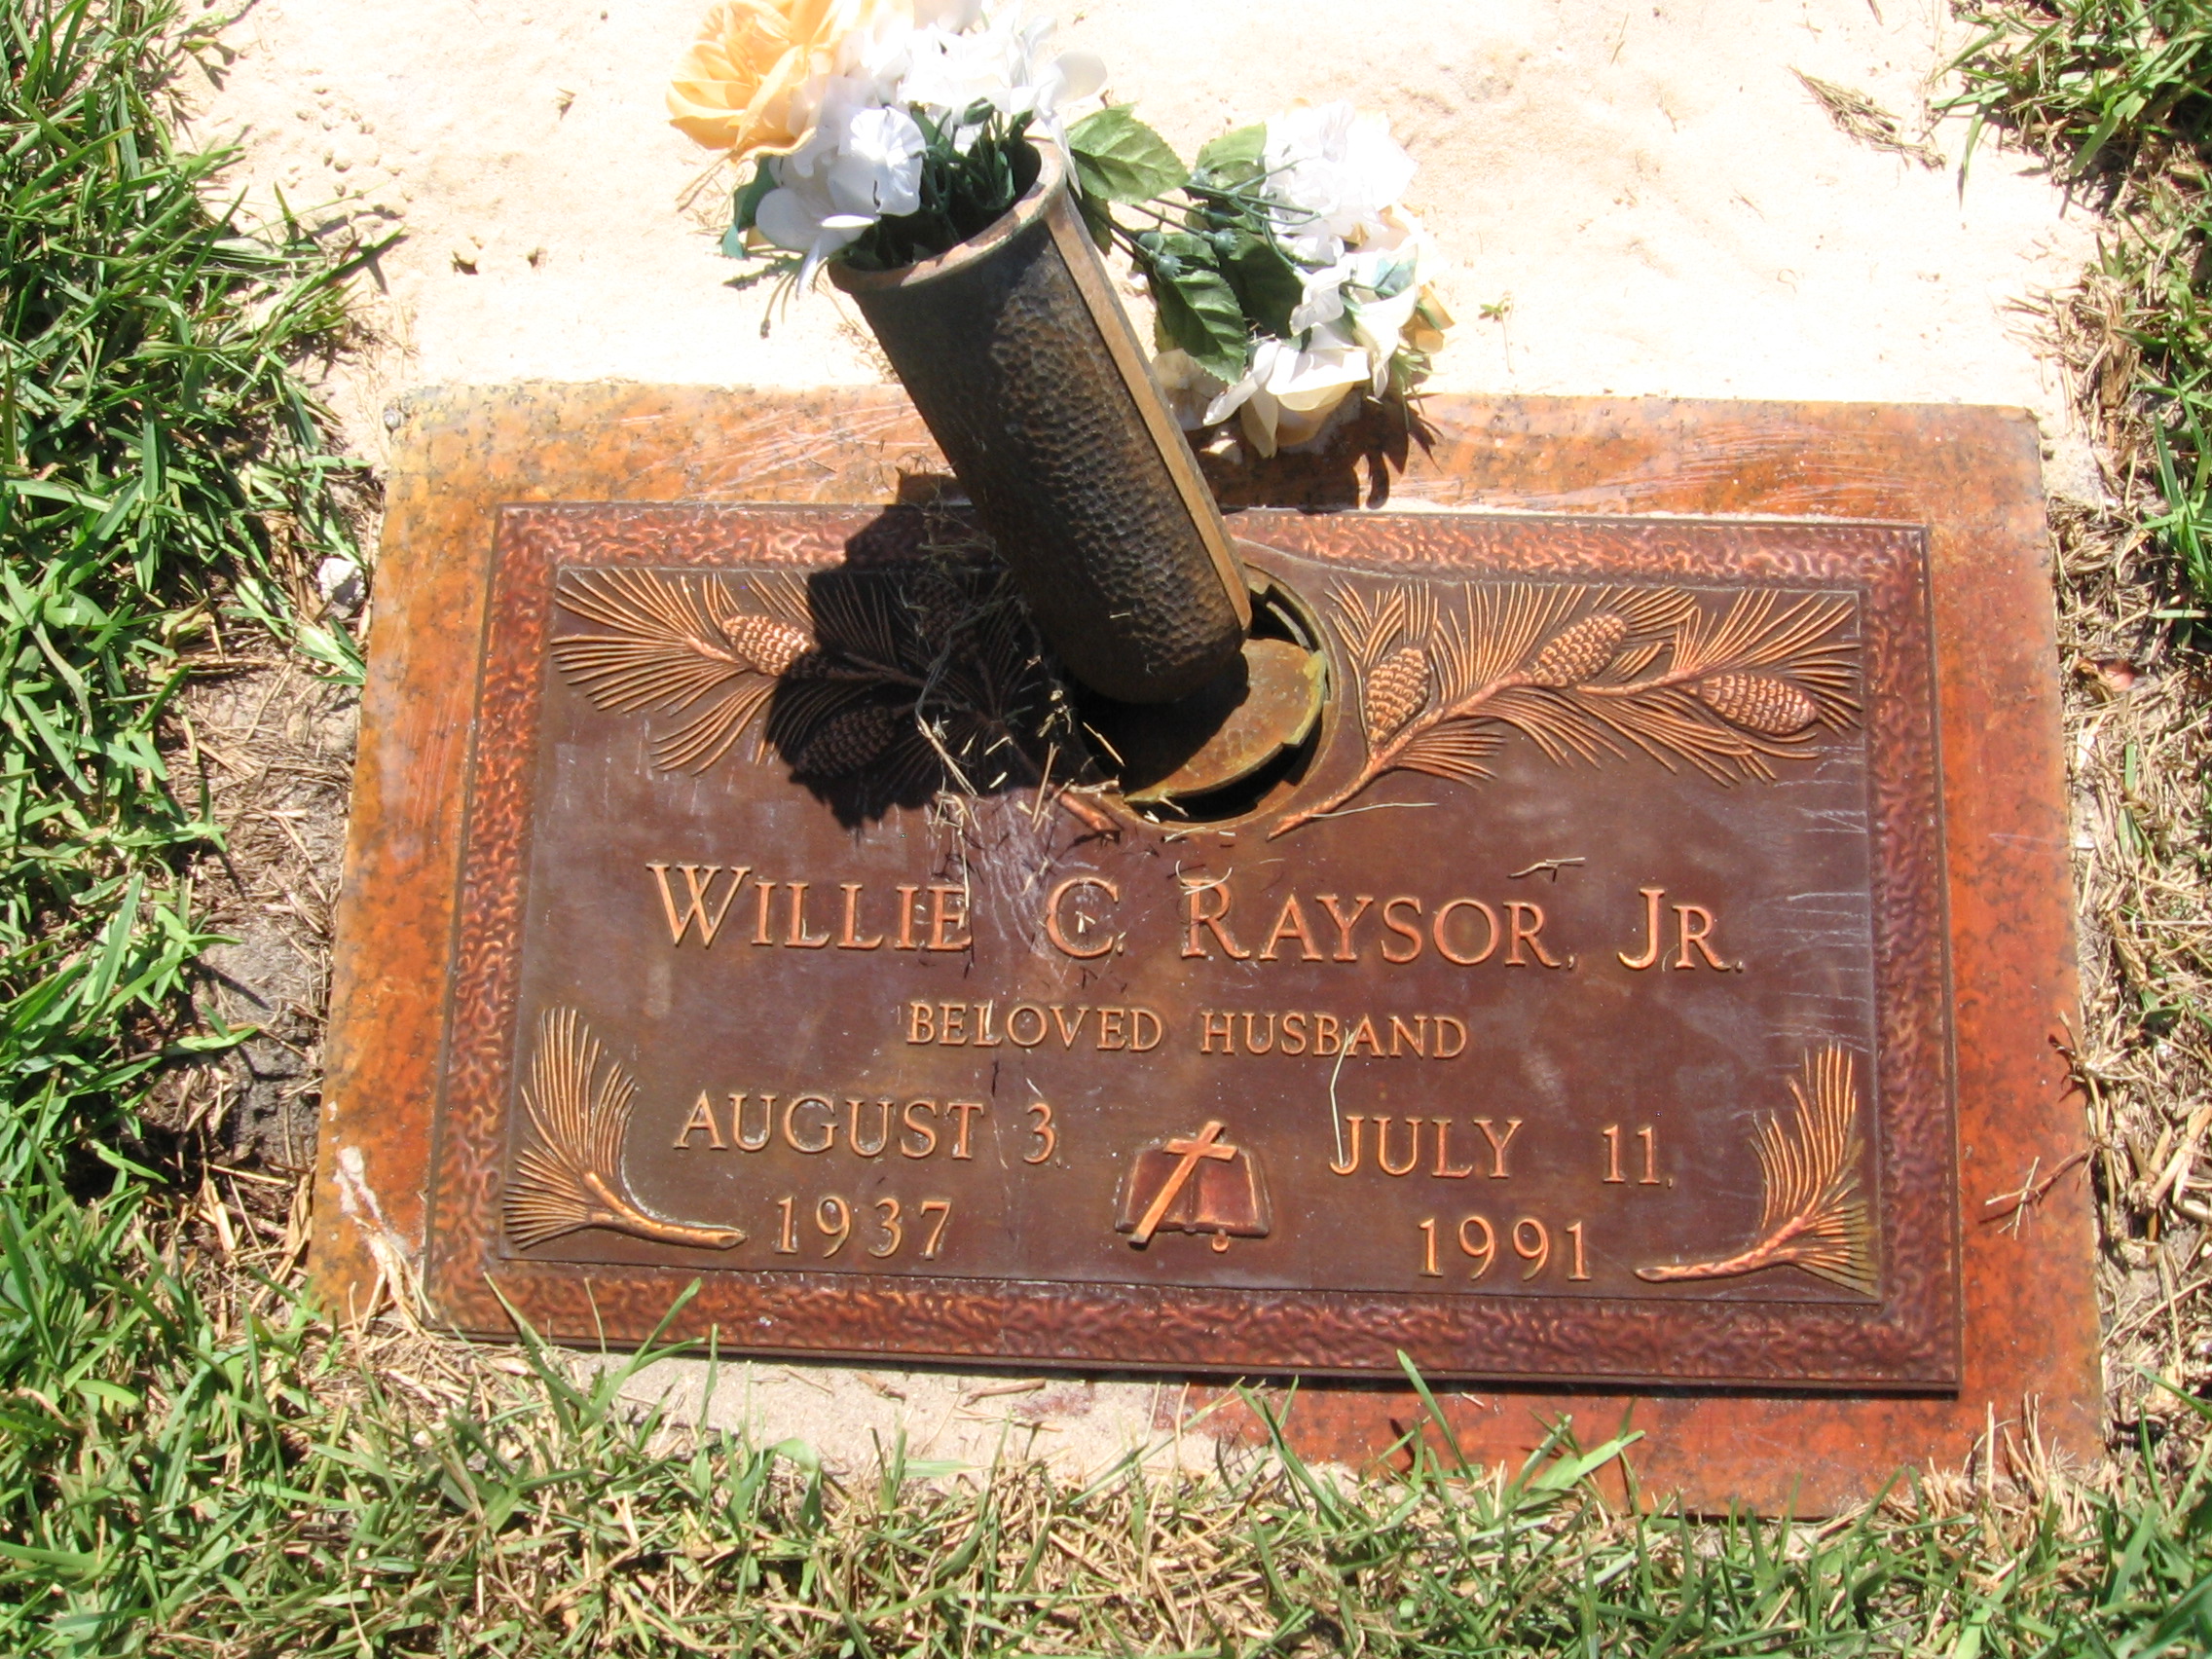 Williw C Raysor, Jr